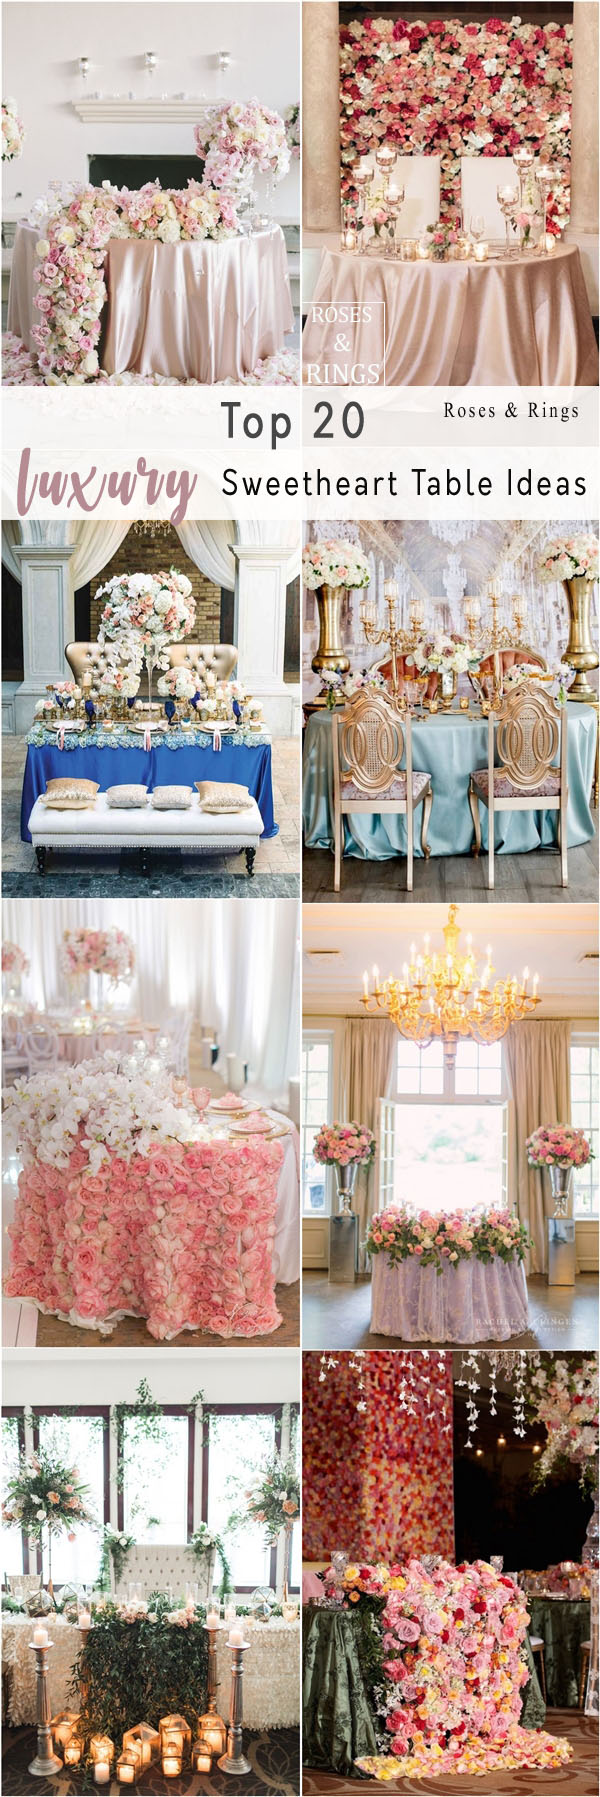 luxury wedding reception sweetheart table ideas